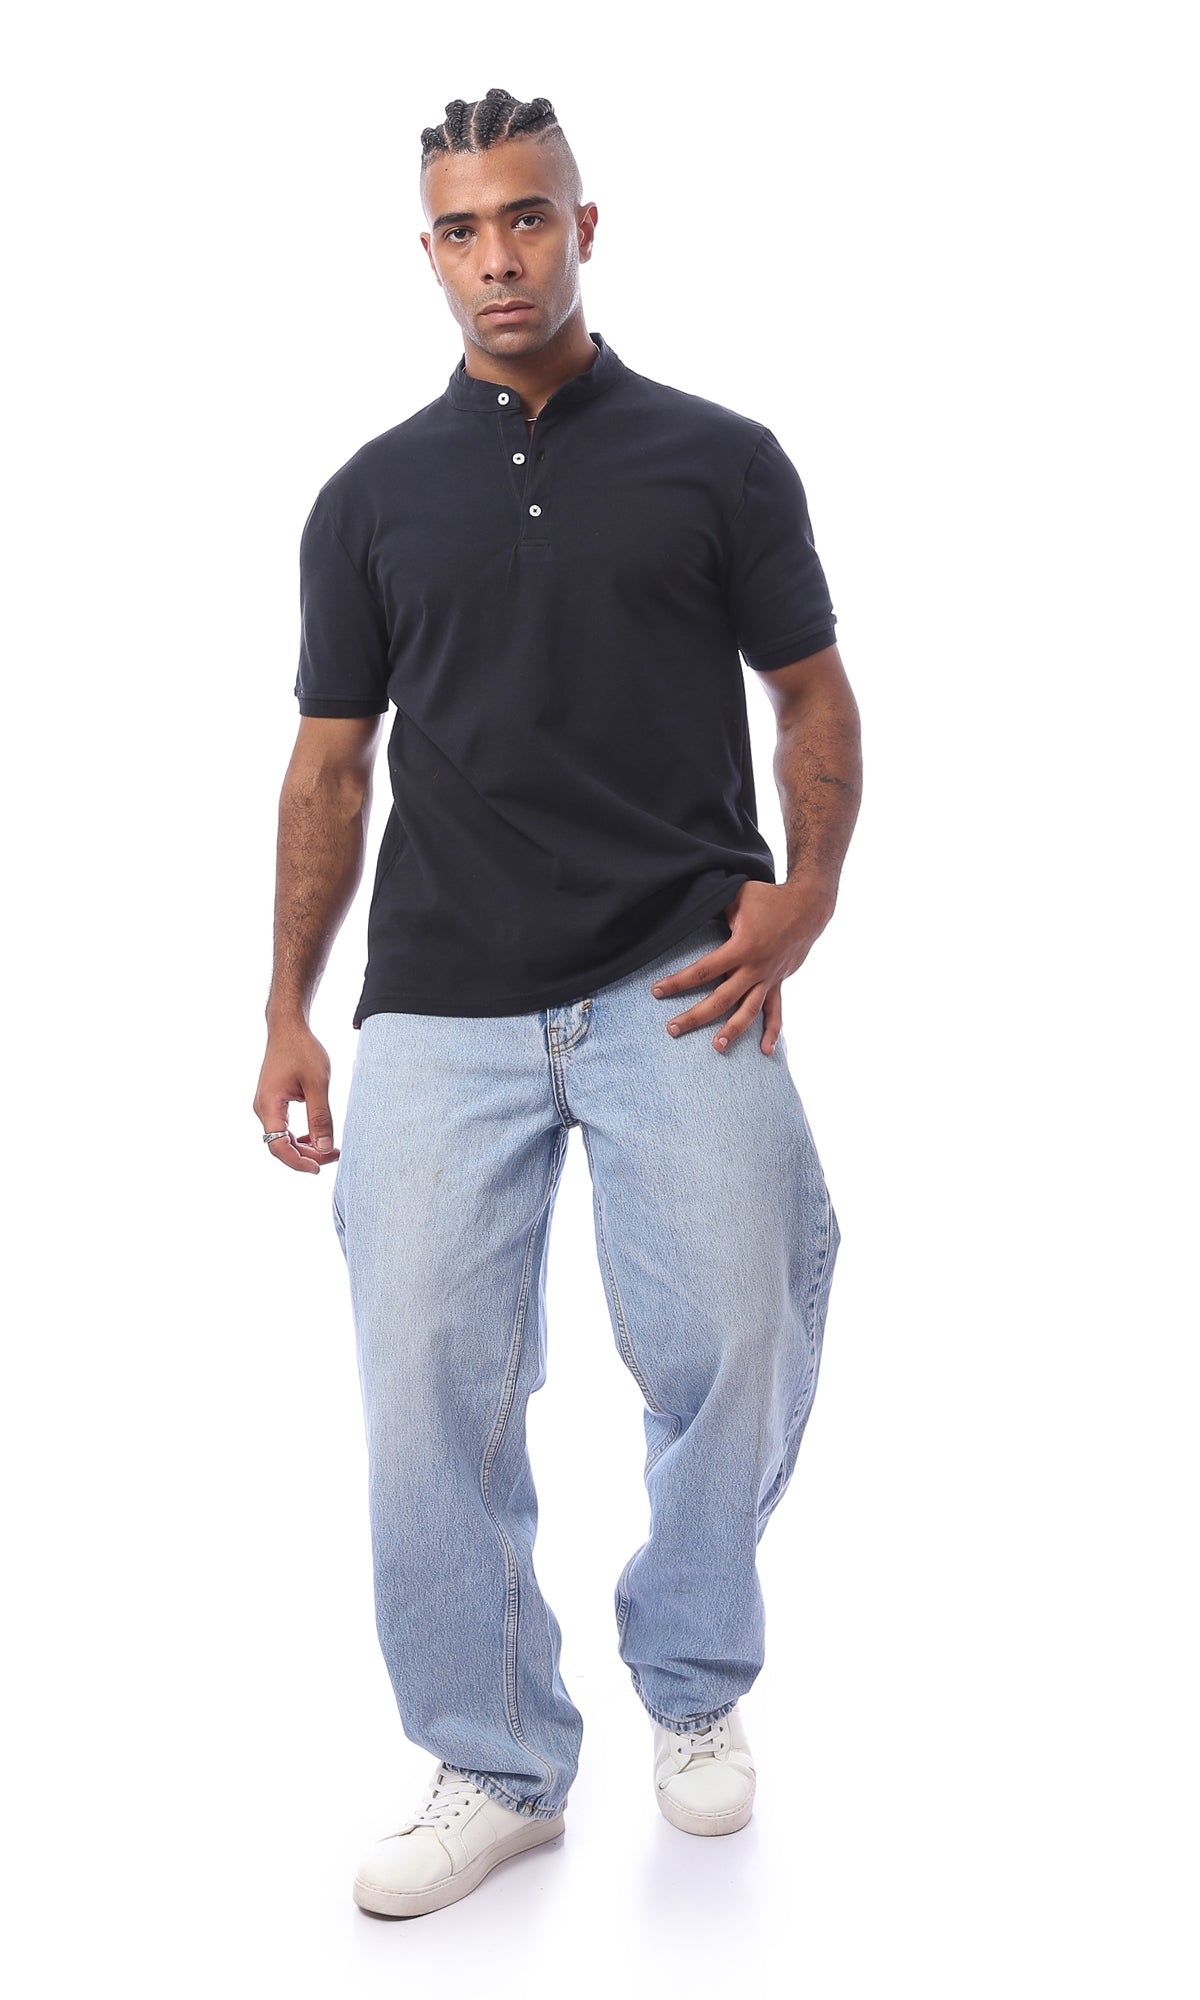 O167053 Solid Black Comfy Casual Polo Shirt